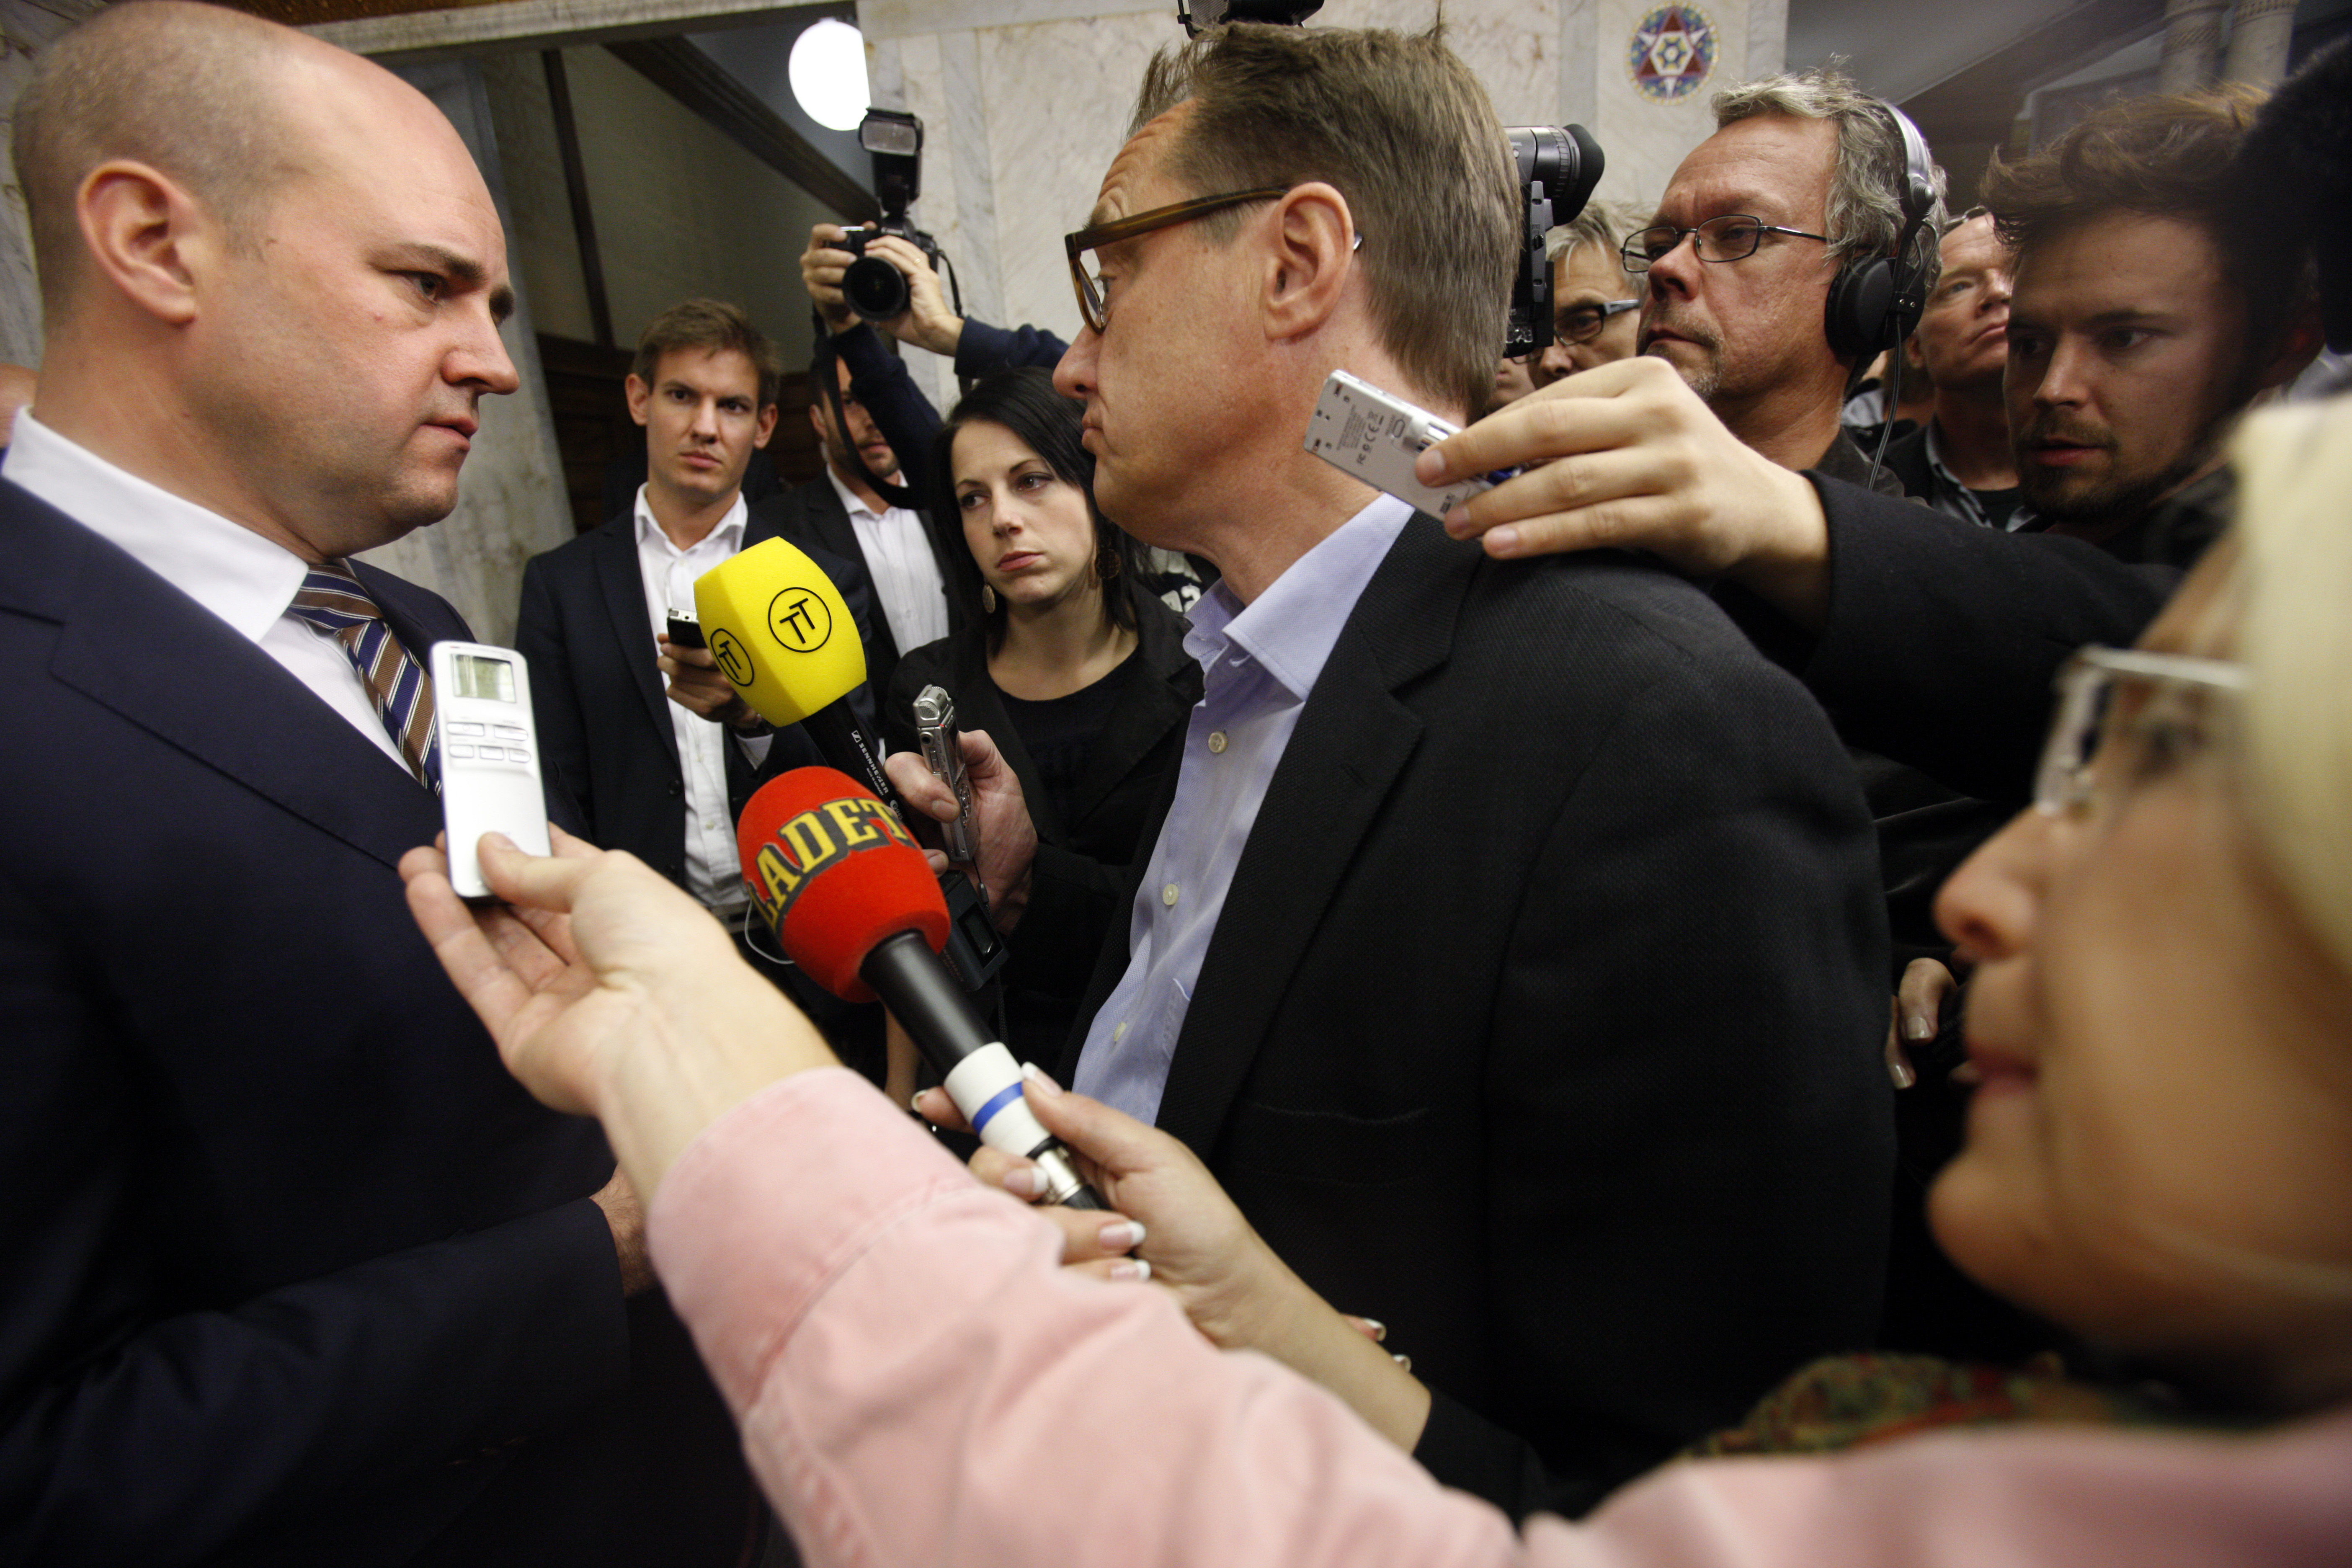 Alliansen, Mandat, Regeringen, Riksdagsvalet 2010, Riksdagen, Fredrik Reinfeldt, Valmyndigheten, Göran Hägglund